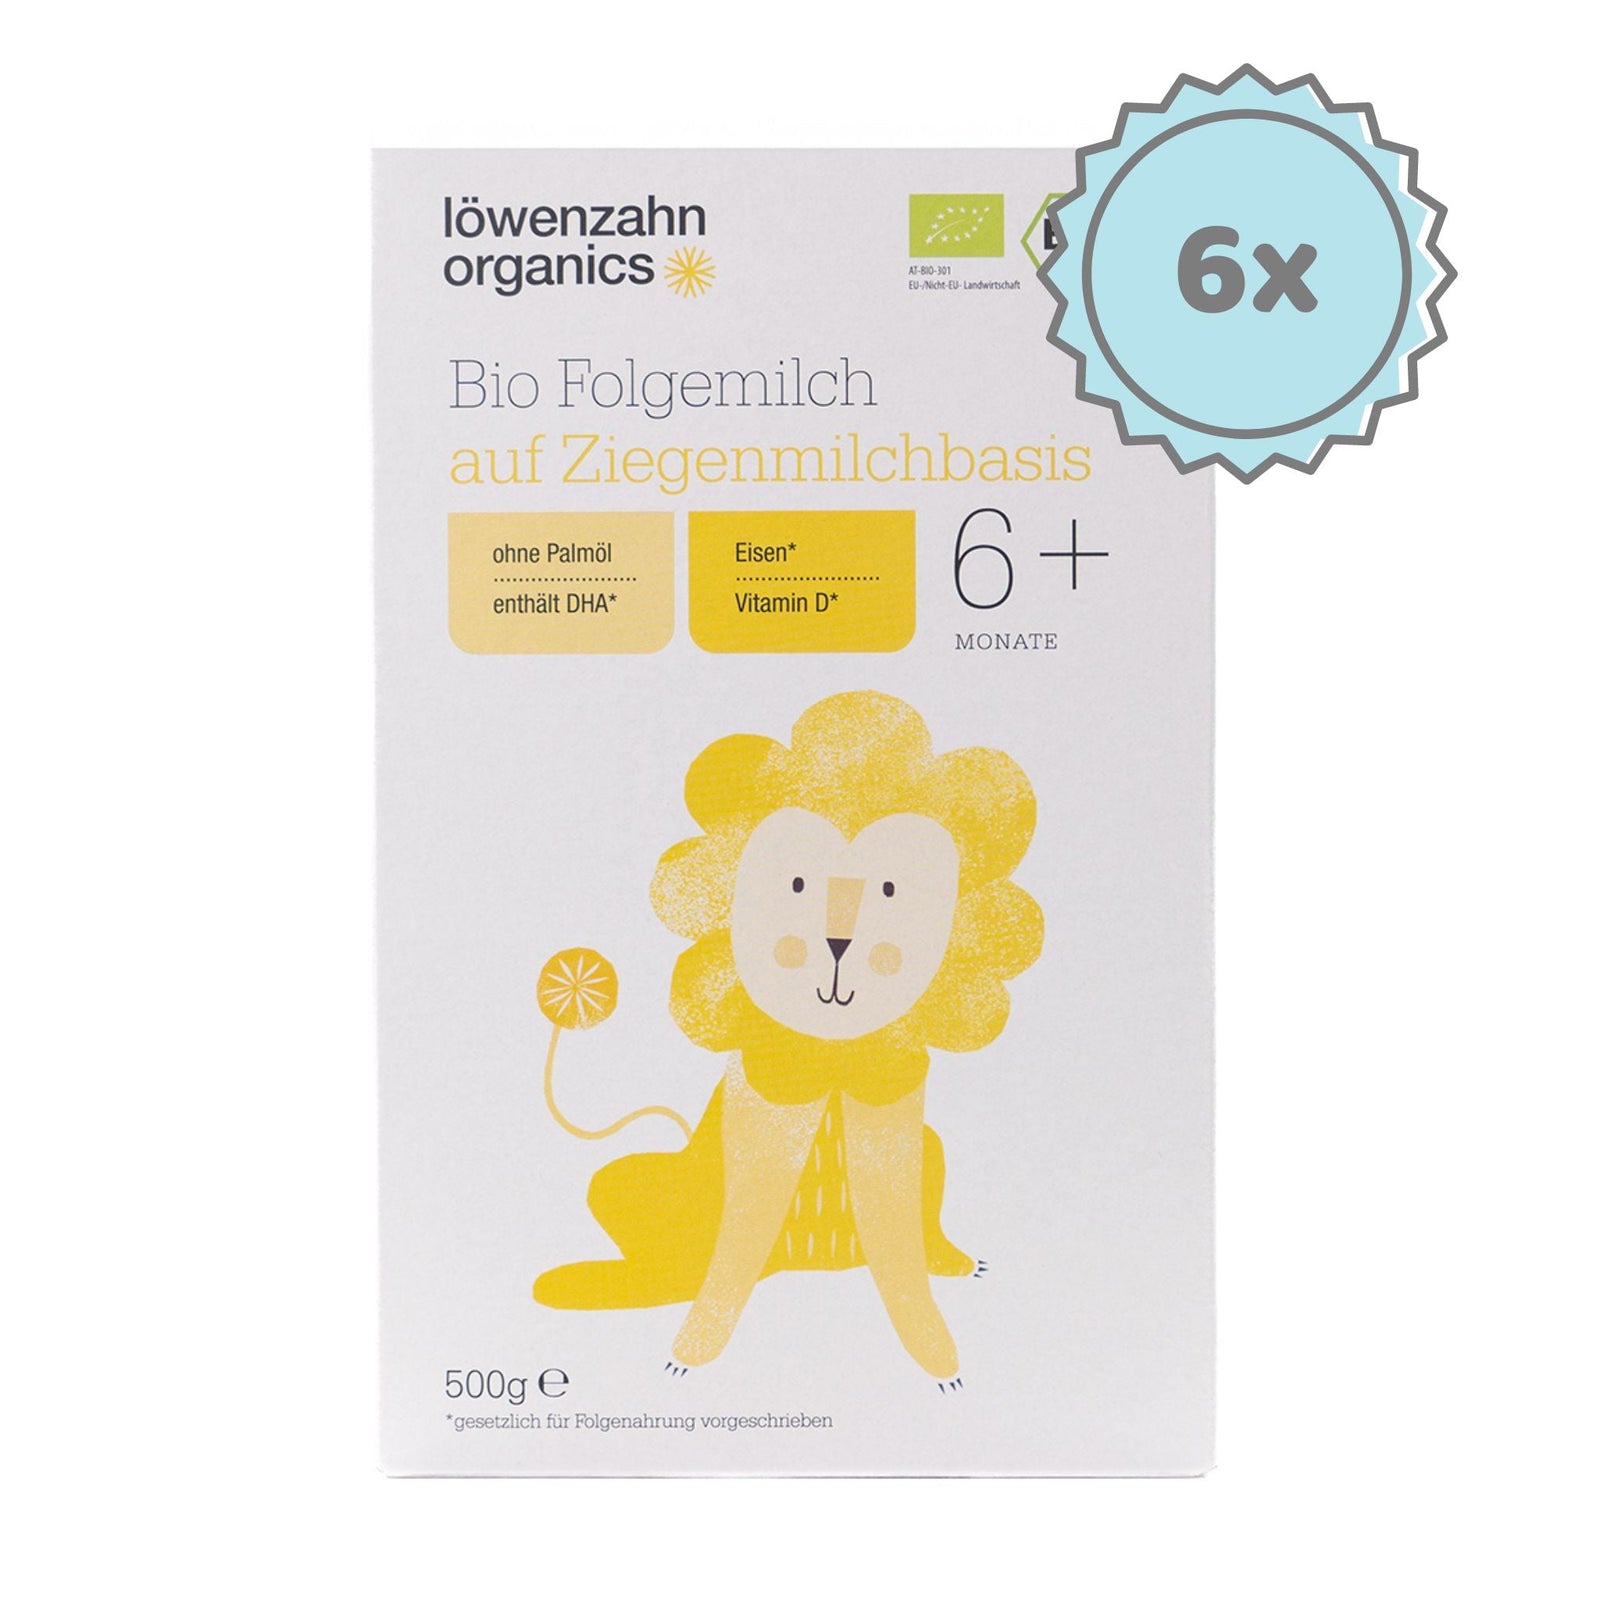 Löwenzahn Organics Goat Stage 2 | European Follow-On Baby Formula | 6 boxes